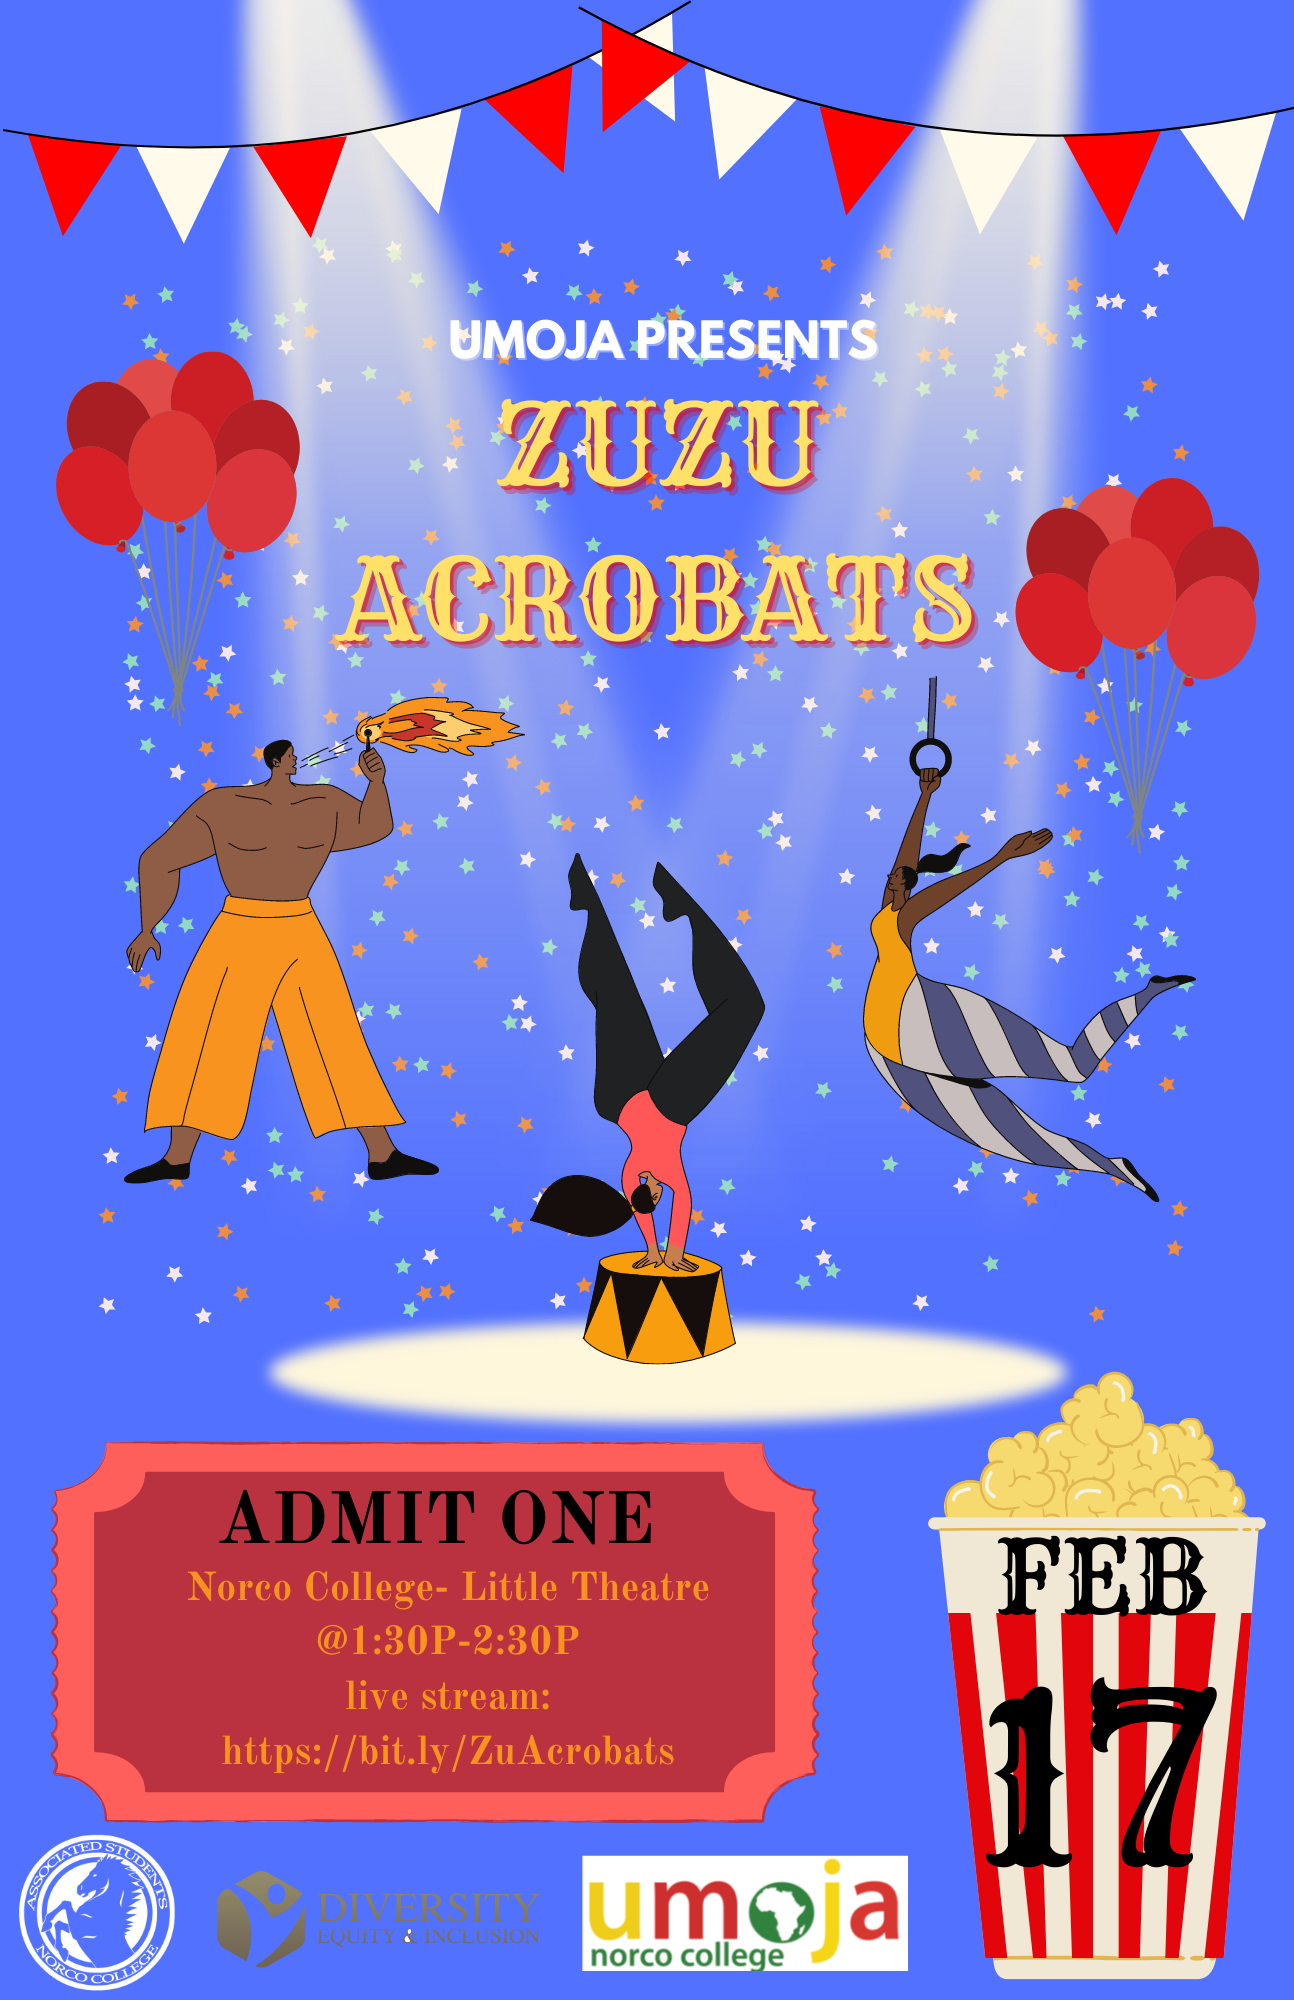 UMOJA presents ZuZu Acrobats flyer